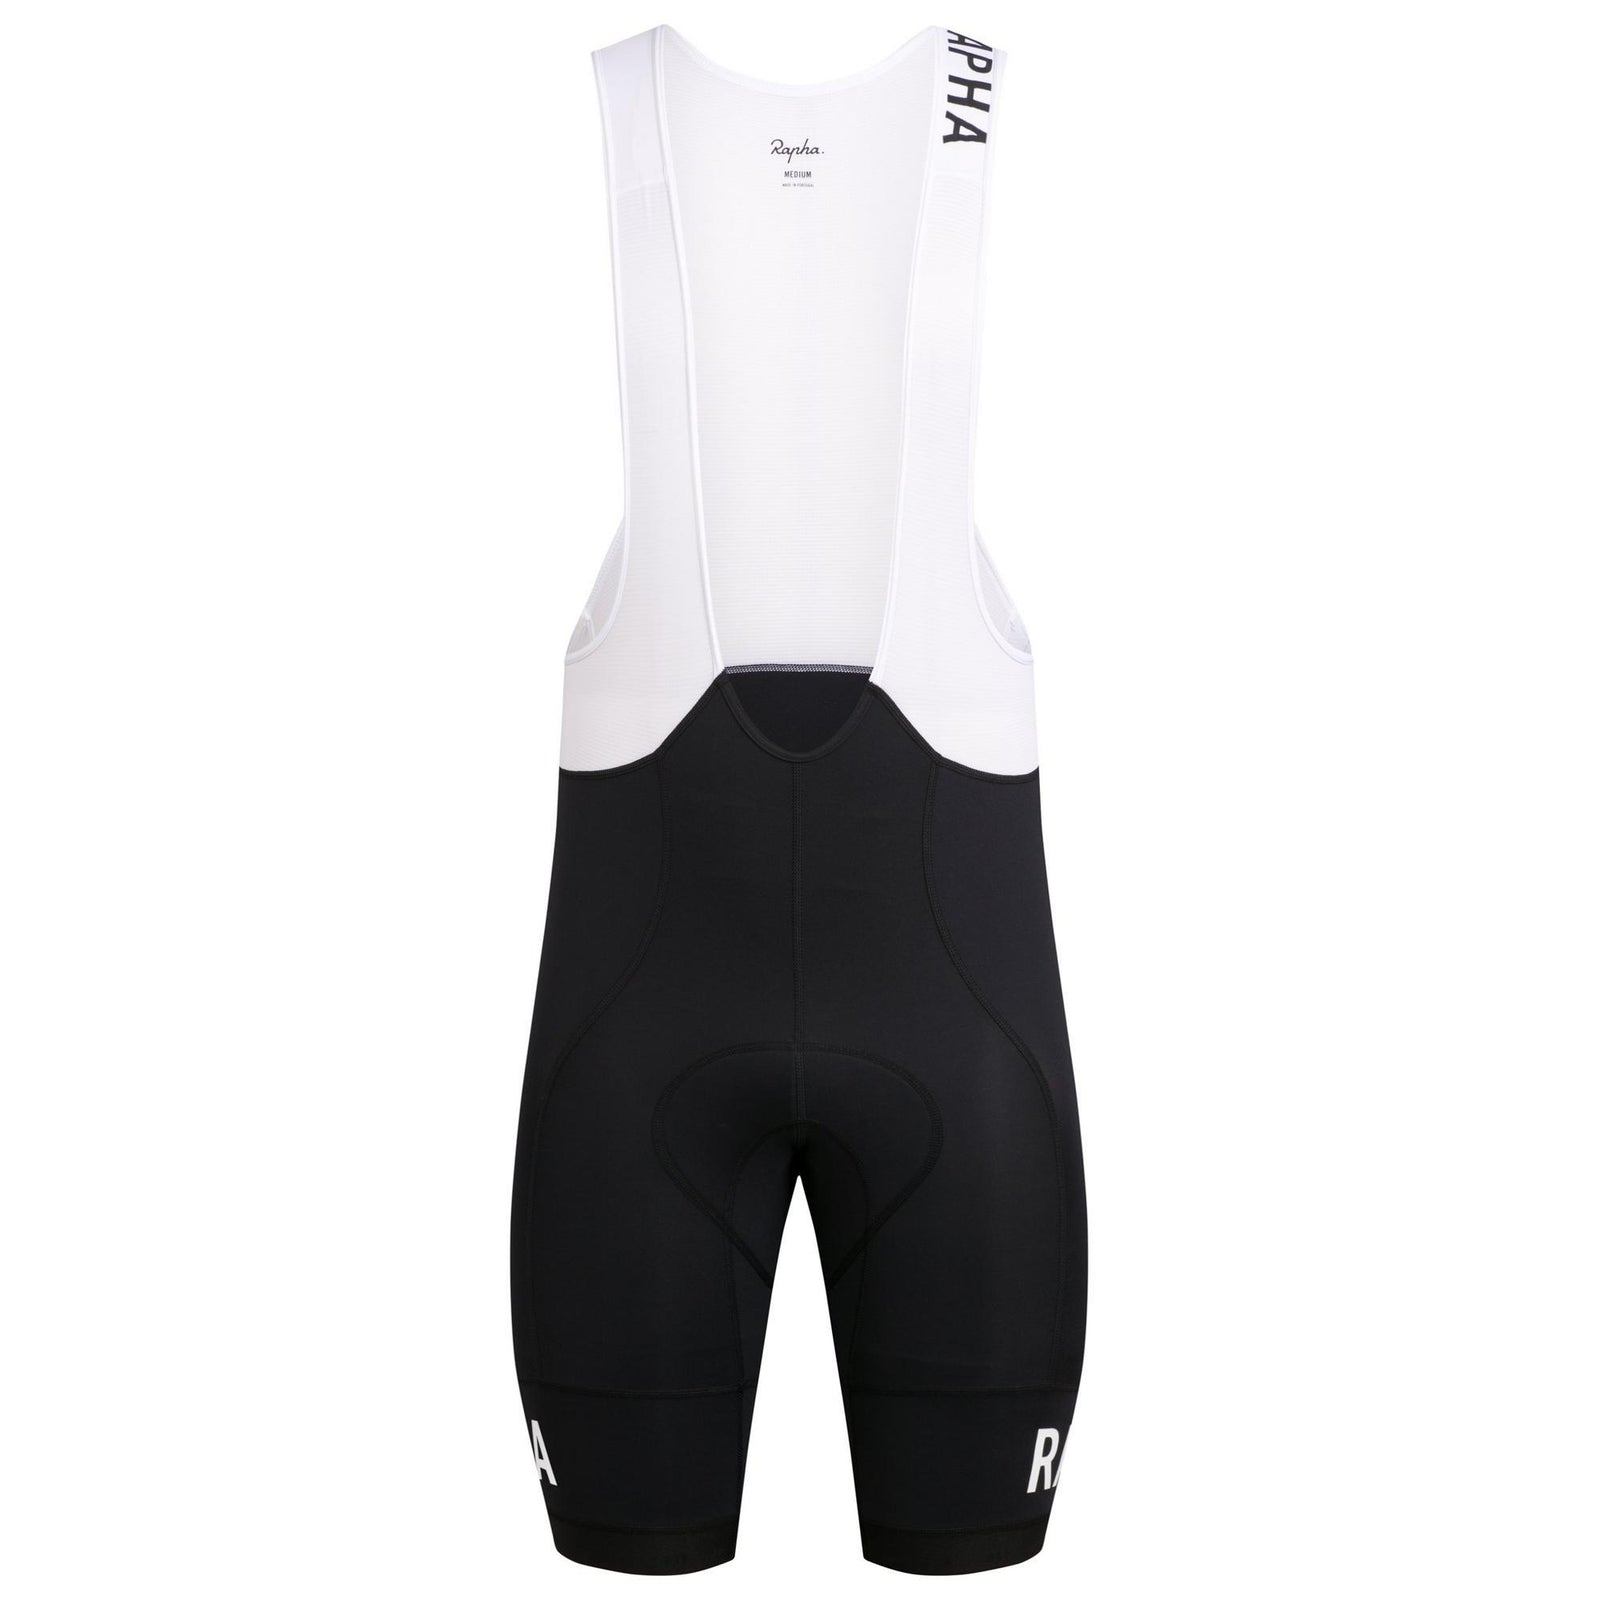 CYCLING Rapha PRO TEAM WINTER - Bib Cycling Shorts - Men's - burgundy/off  white - Private Sport Shop